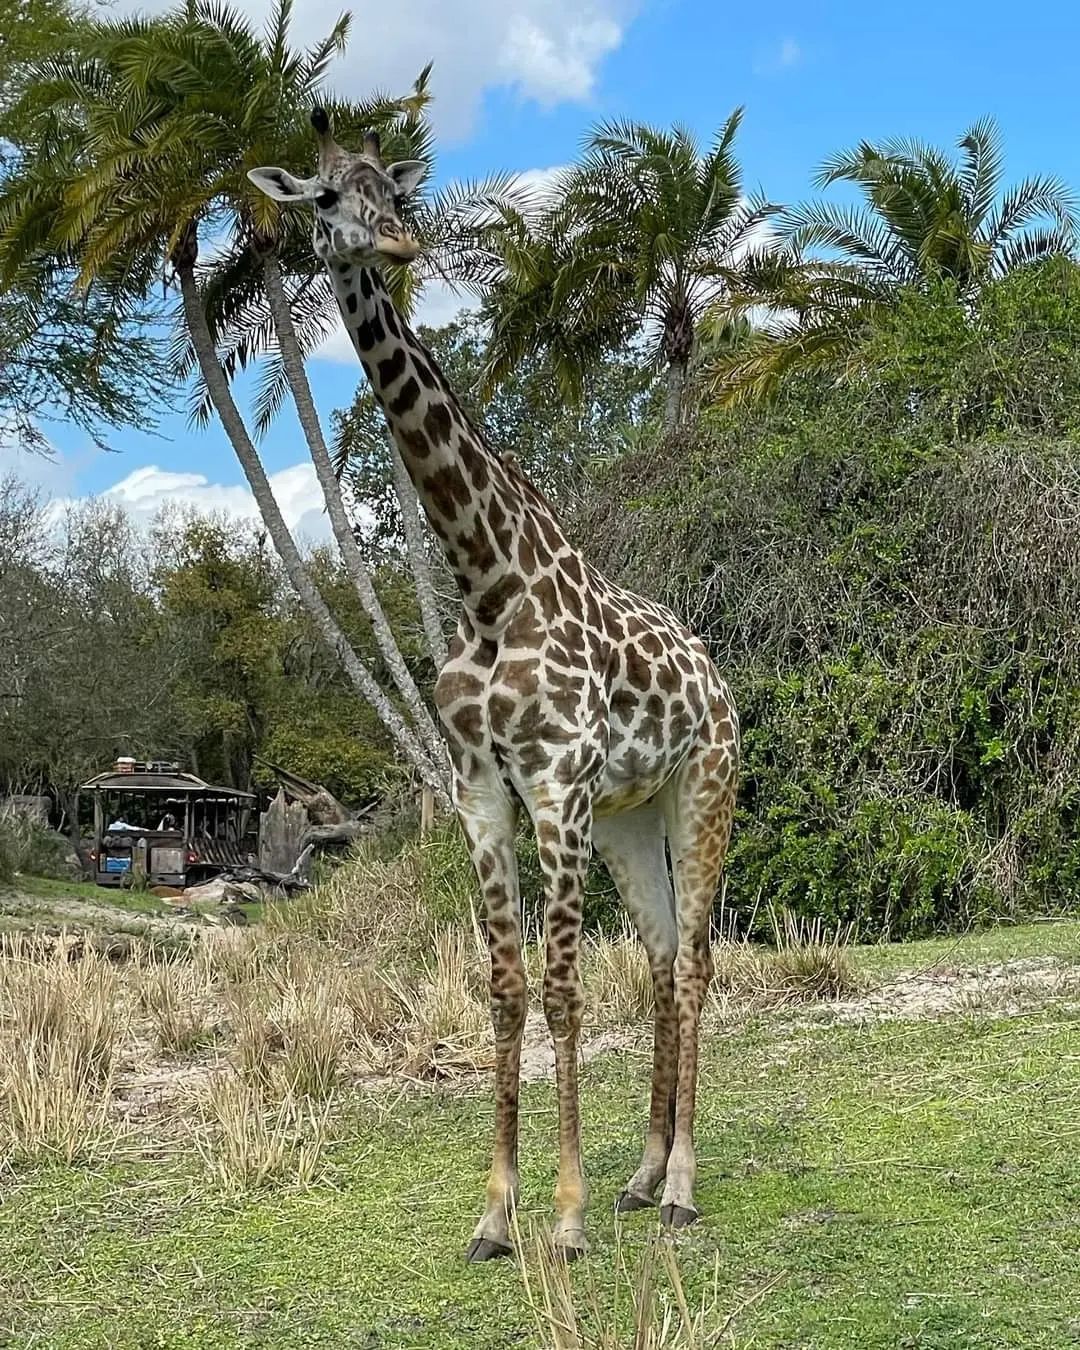 Giraffe at Kilimanjaro Safaris - Animal Kingdom Attraction